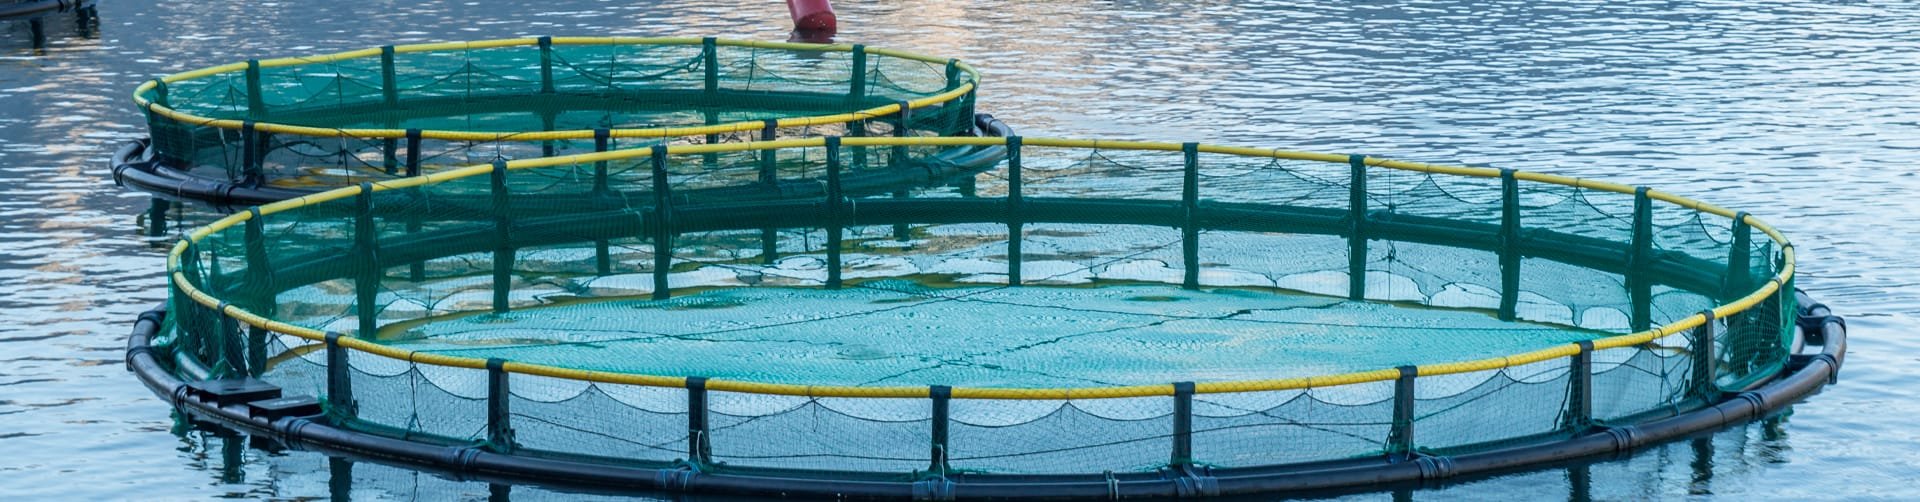 Nets for Aquaculture | Cittadini